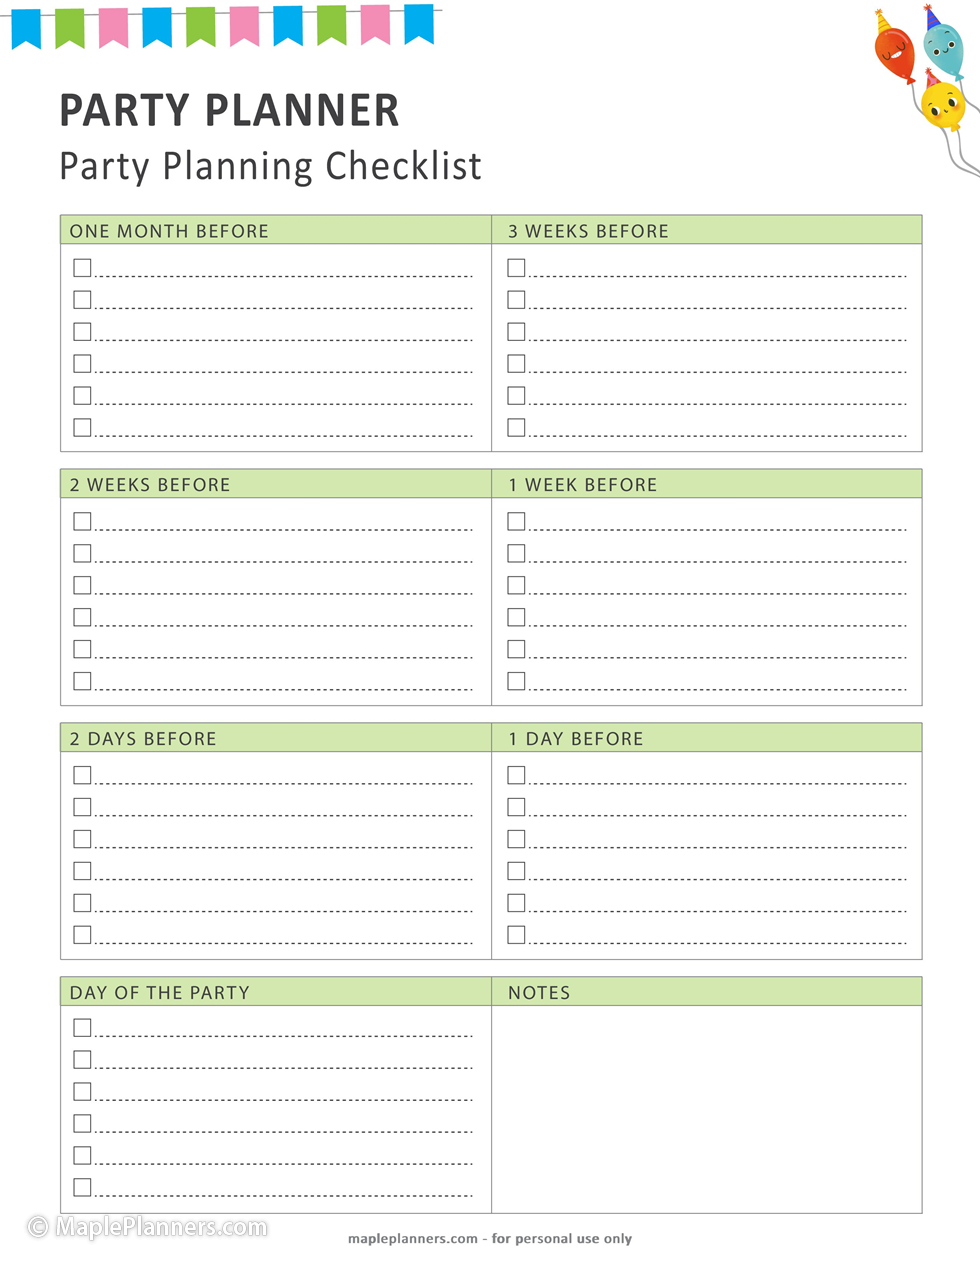 Party Planning Checklist Blank